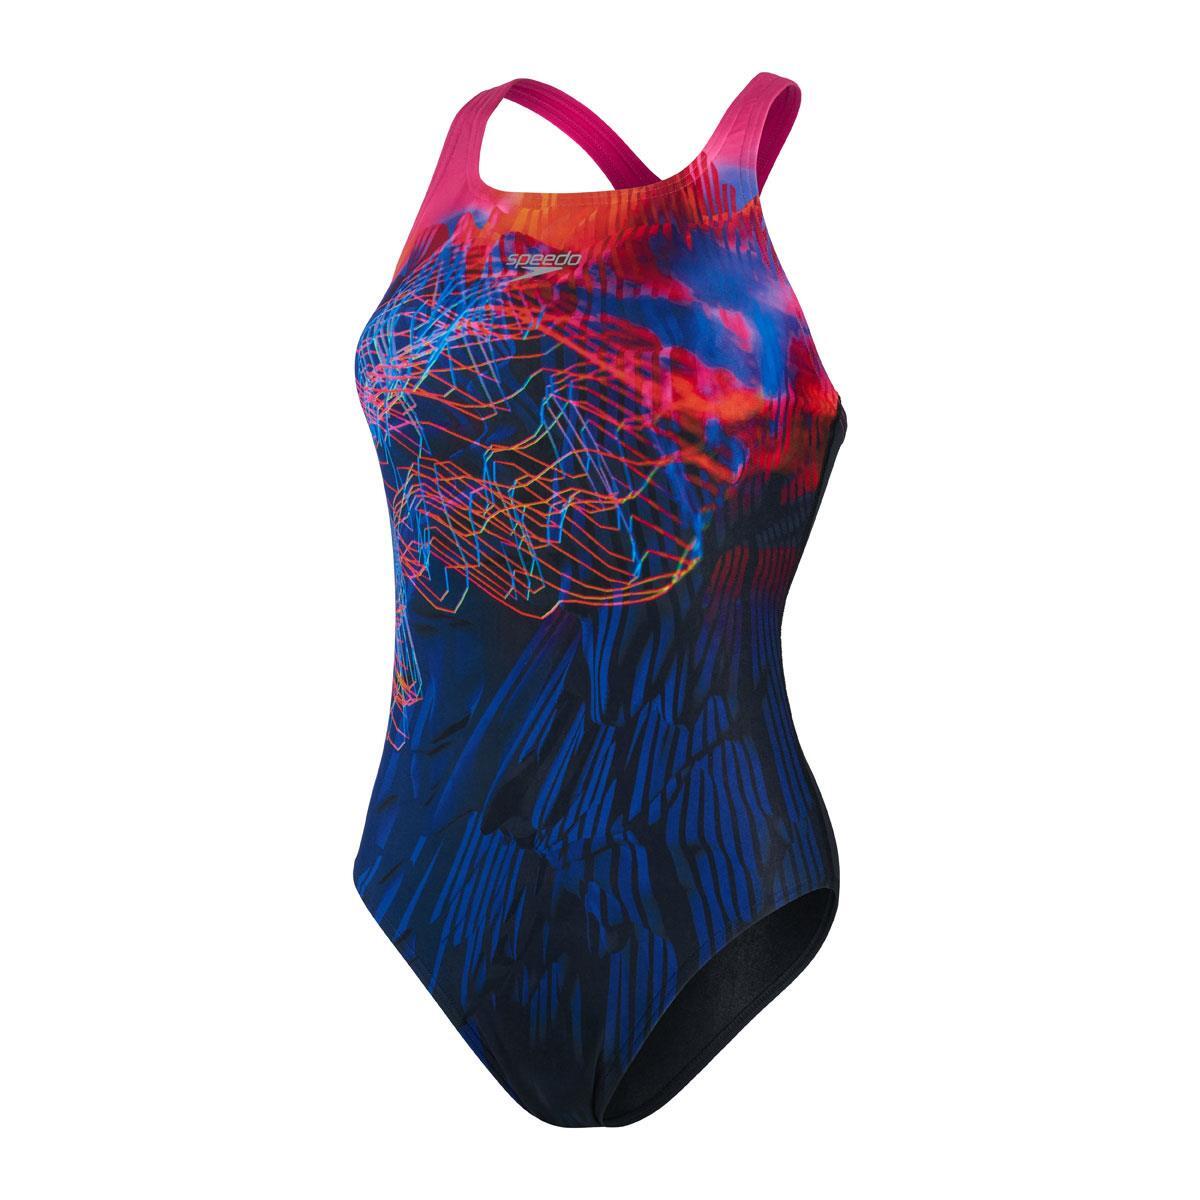 Speedo Women's Placement Digital Medalist Swimsuit - Black/ Pink/ Blue/ Salso 5/5